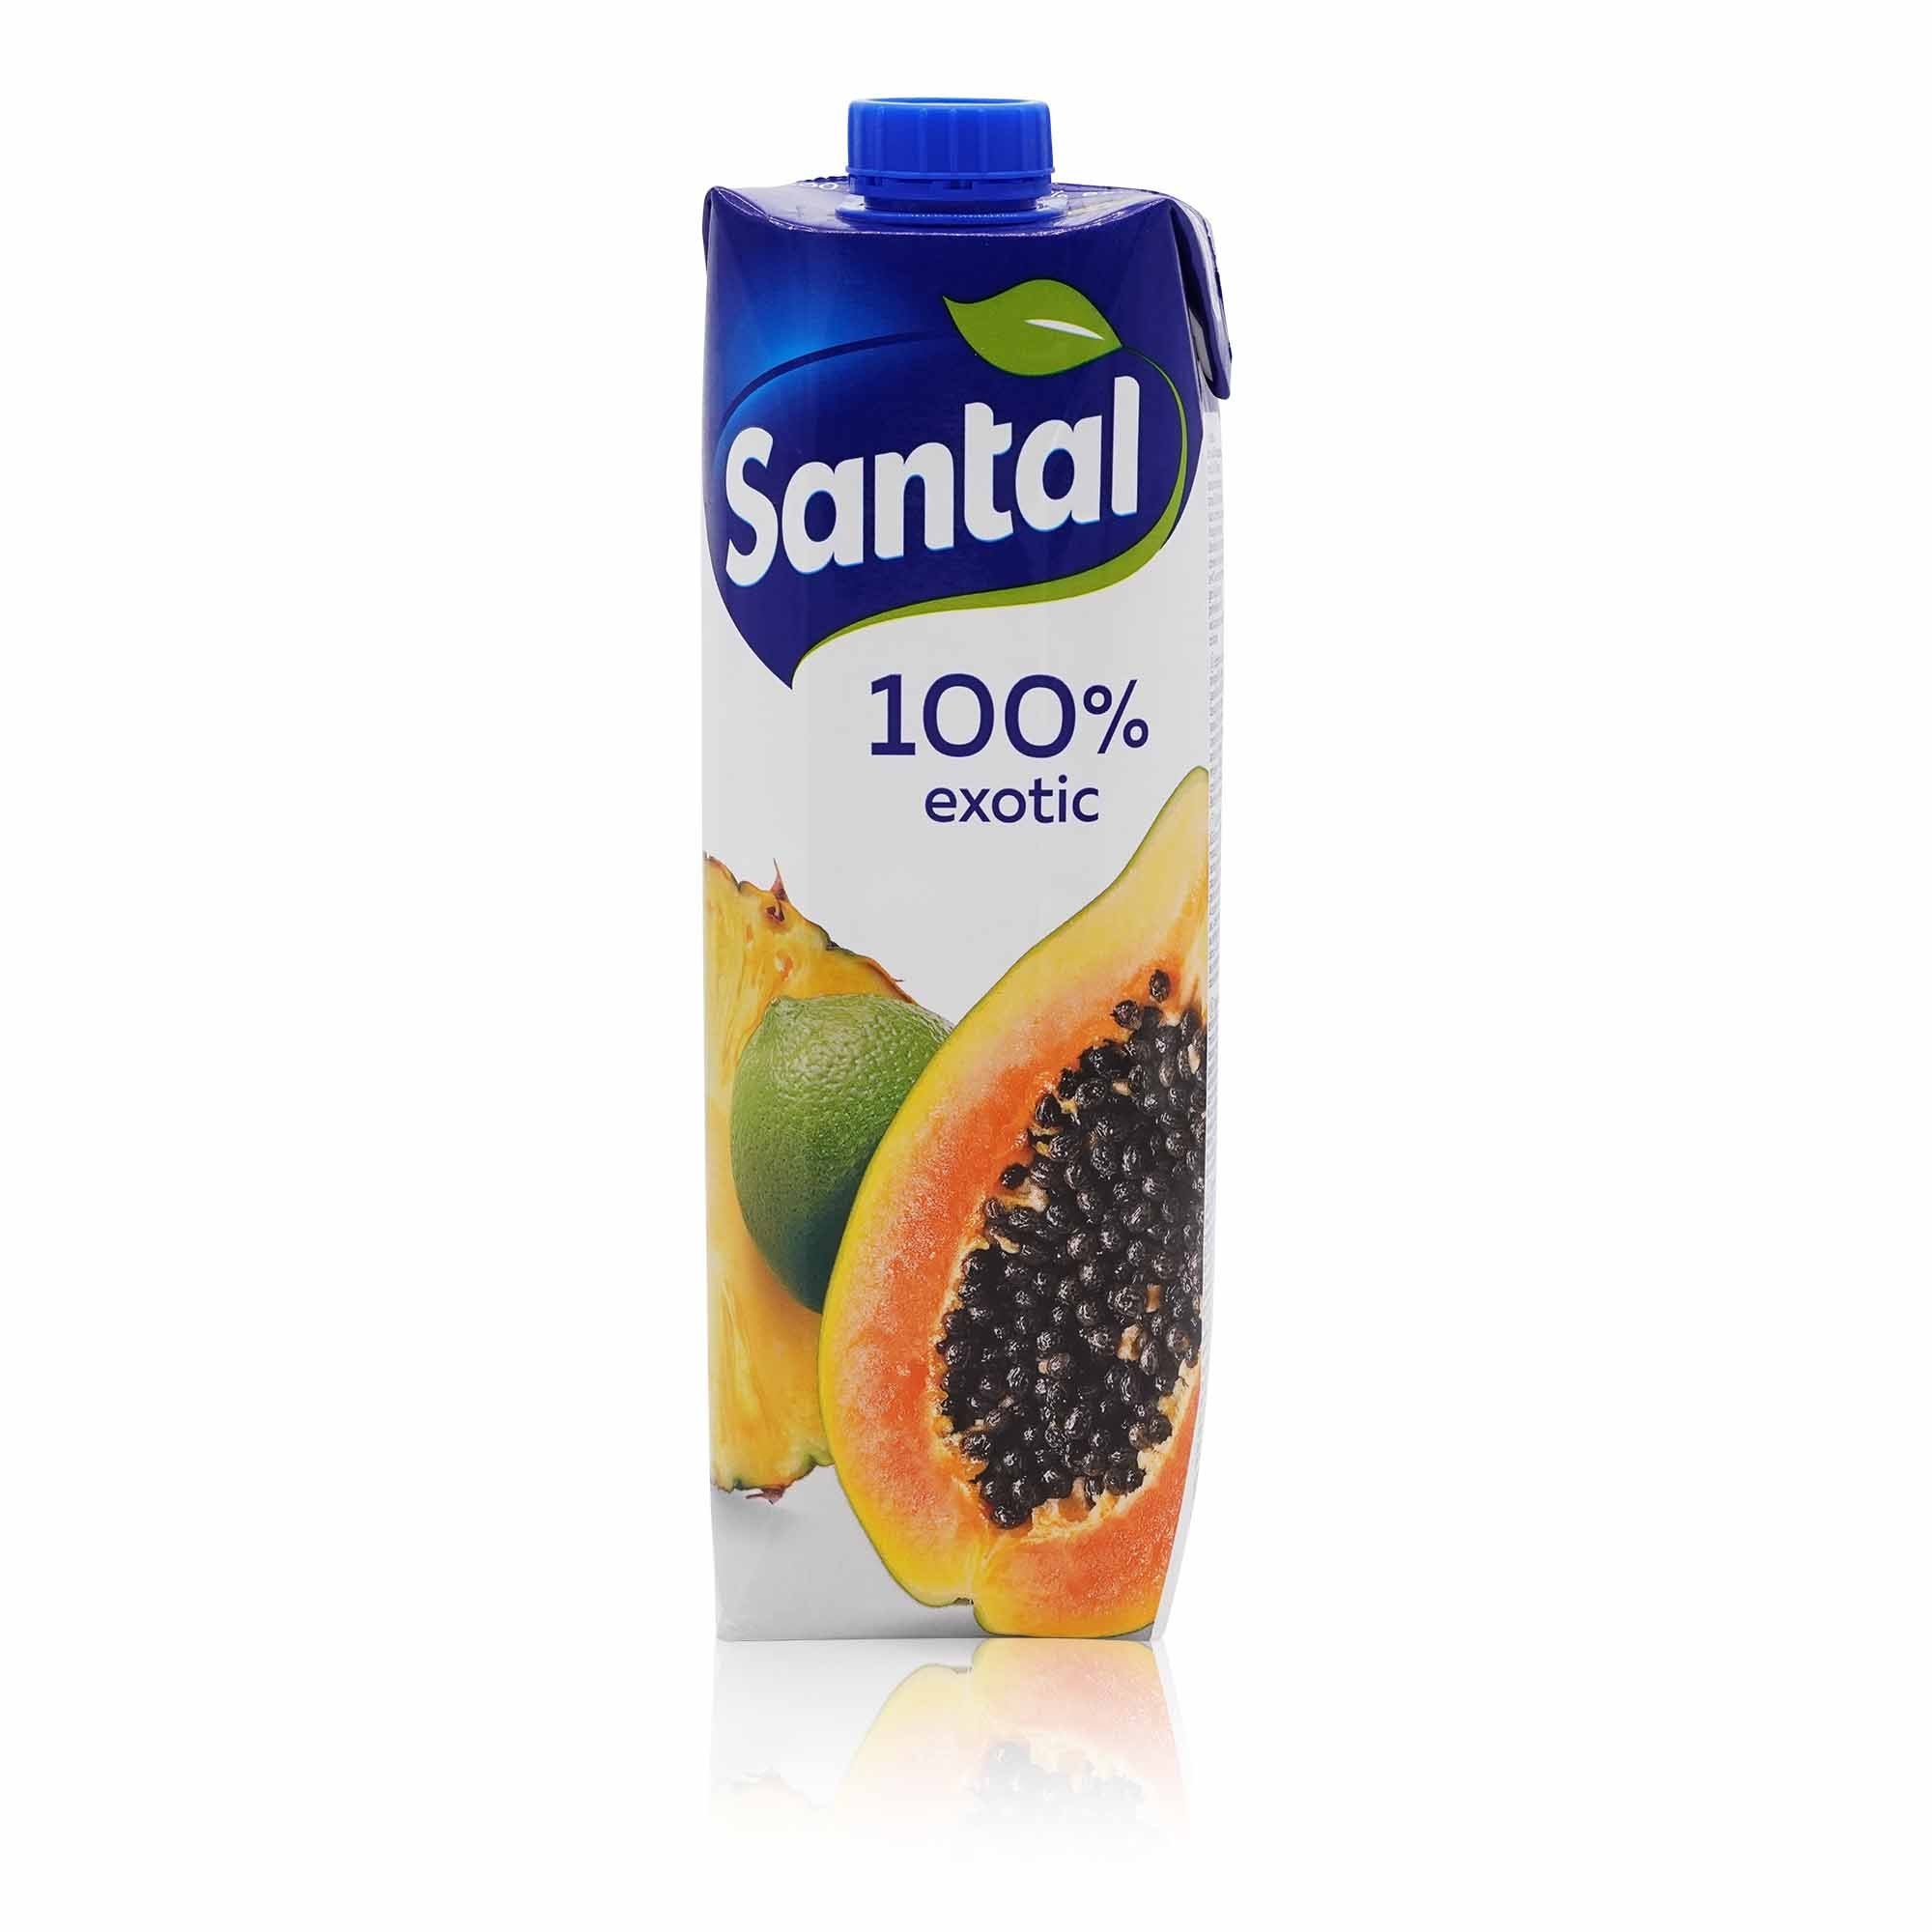 SANTAL Succo di frutti 100% exotic – Fruchtsaft exotische Früchte - 1l